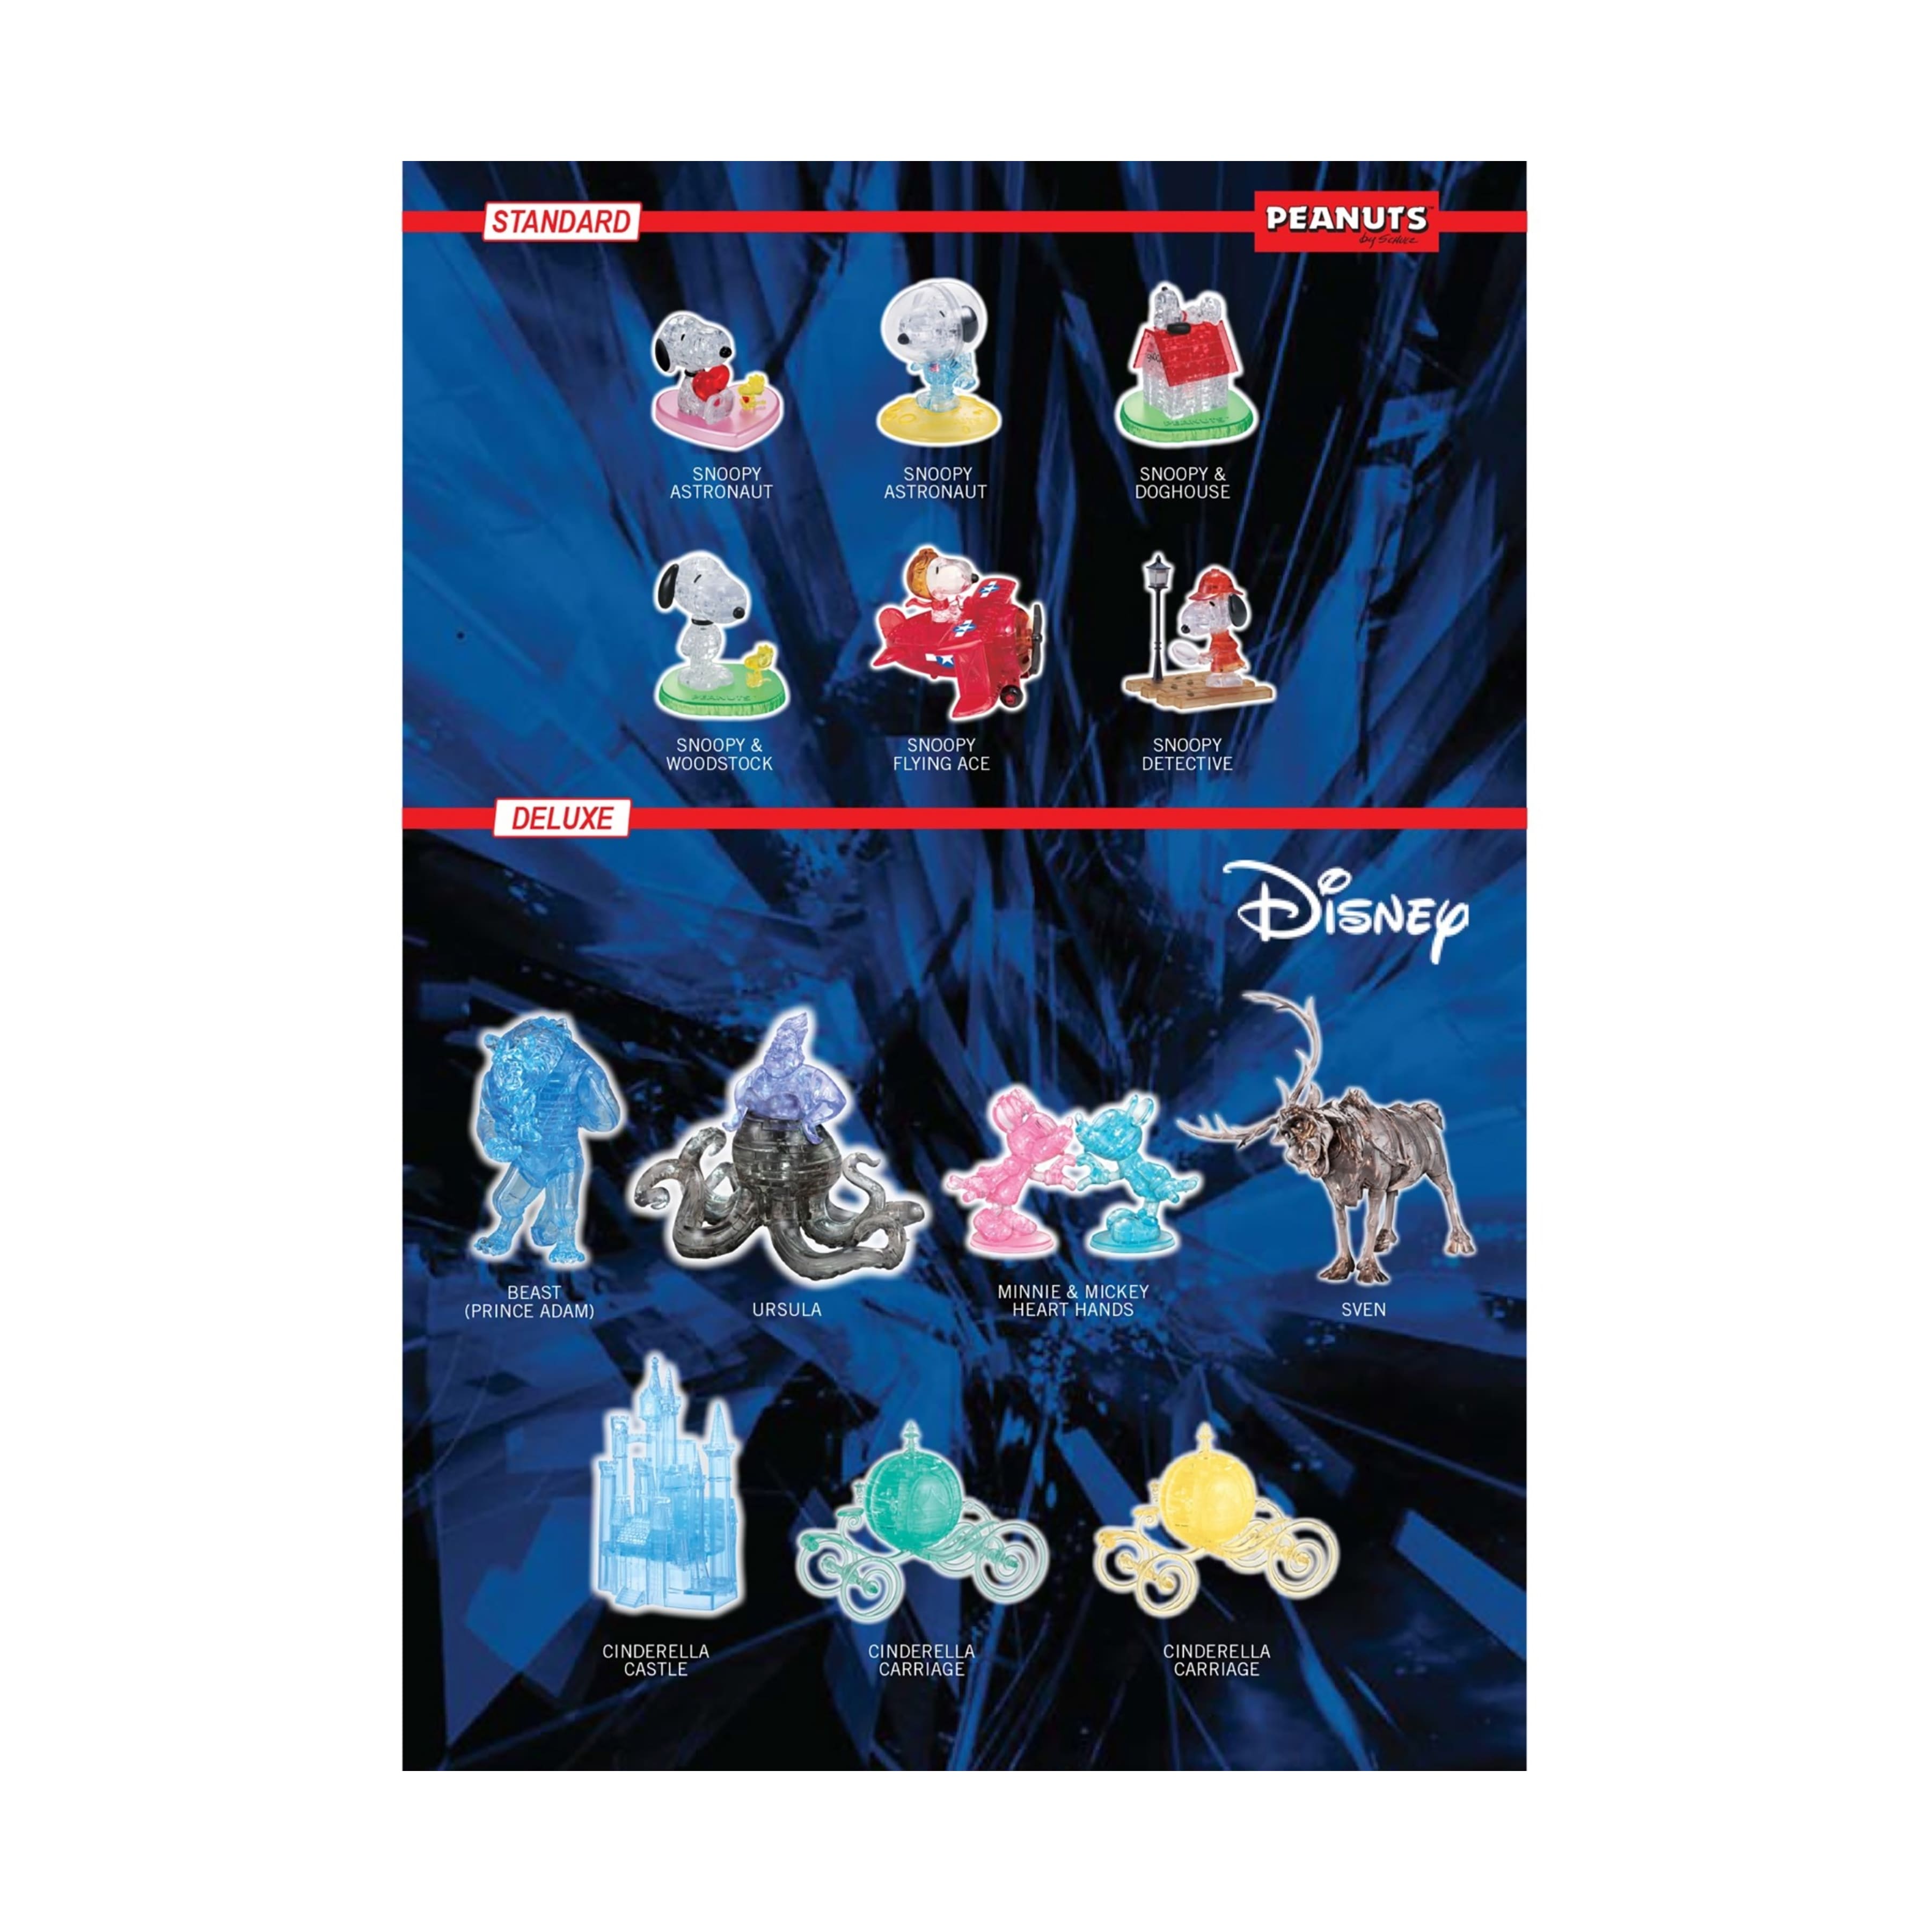 3D Crystal Puzzle - Disney Cinderella&#x27;s Castle (Pink): 71 Pcs